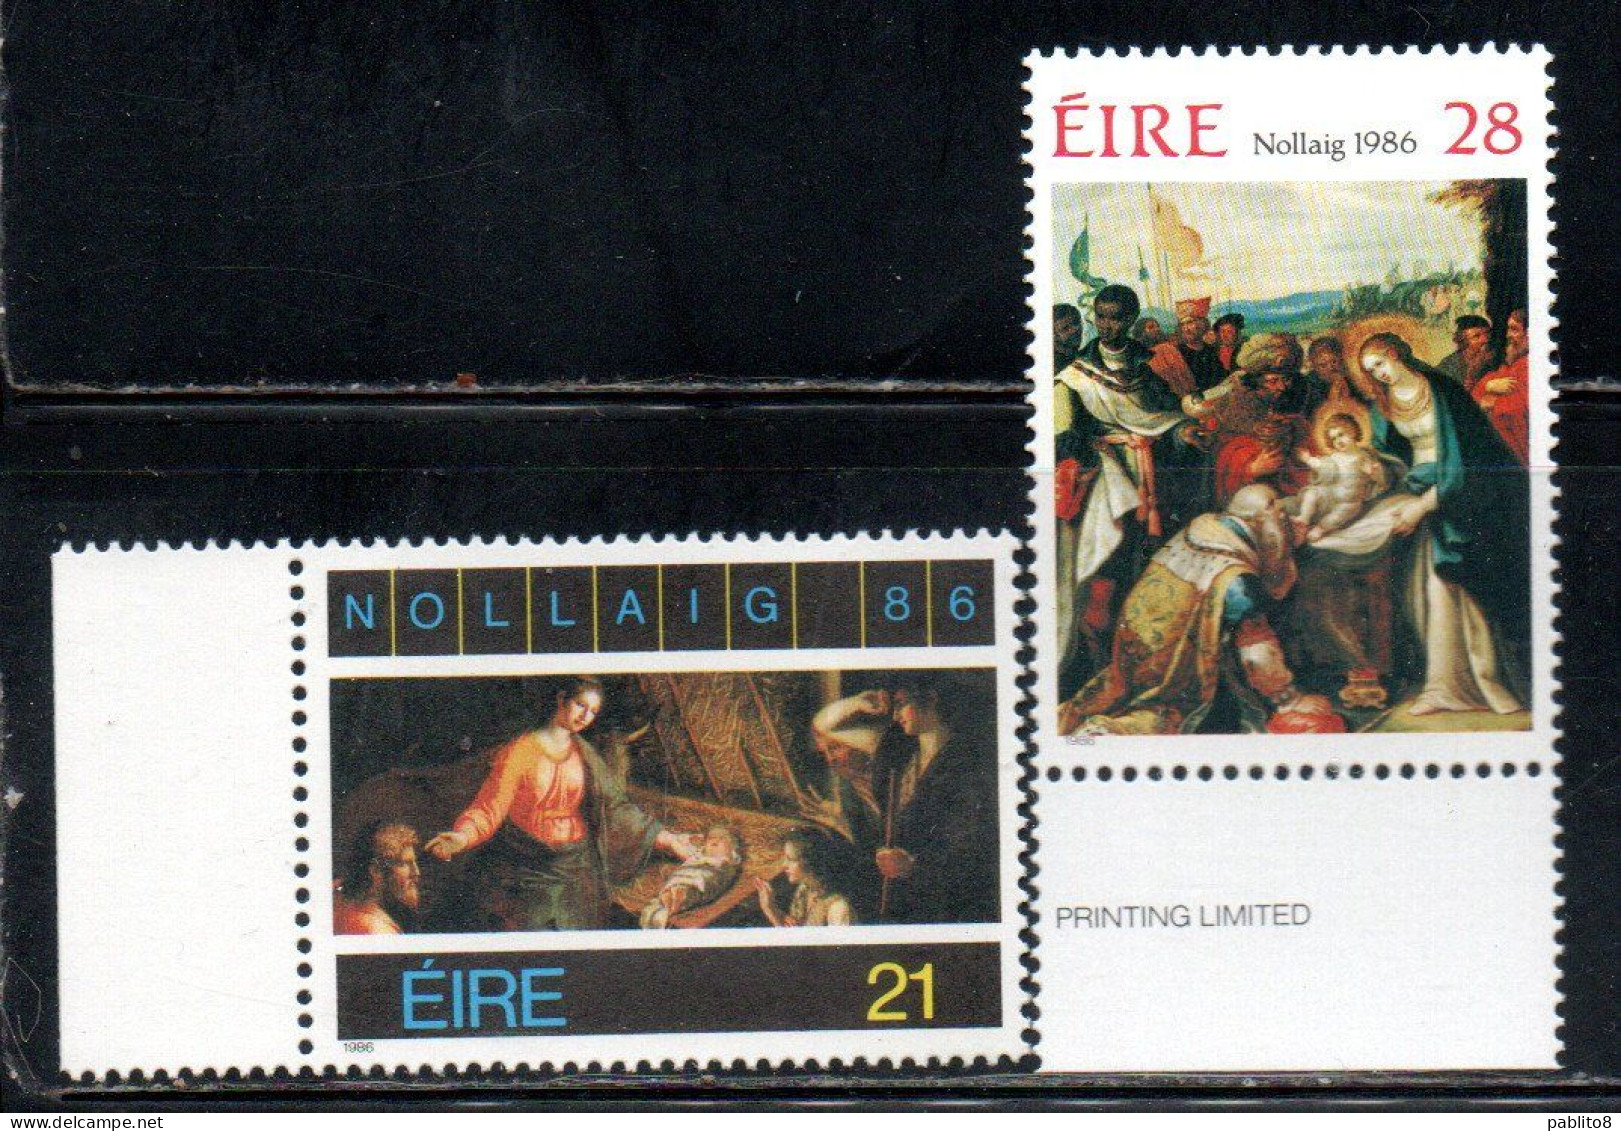 EIRE IRELAND IRLANDA 1986 CHRISTMAS ANNUNCIATION NOLLAIG NATALE NOEL WEIHNACHTEN NAVIDAD COMPLETE SET SERIE COMPLETA MNH - Unused Stamps